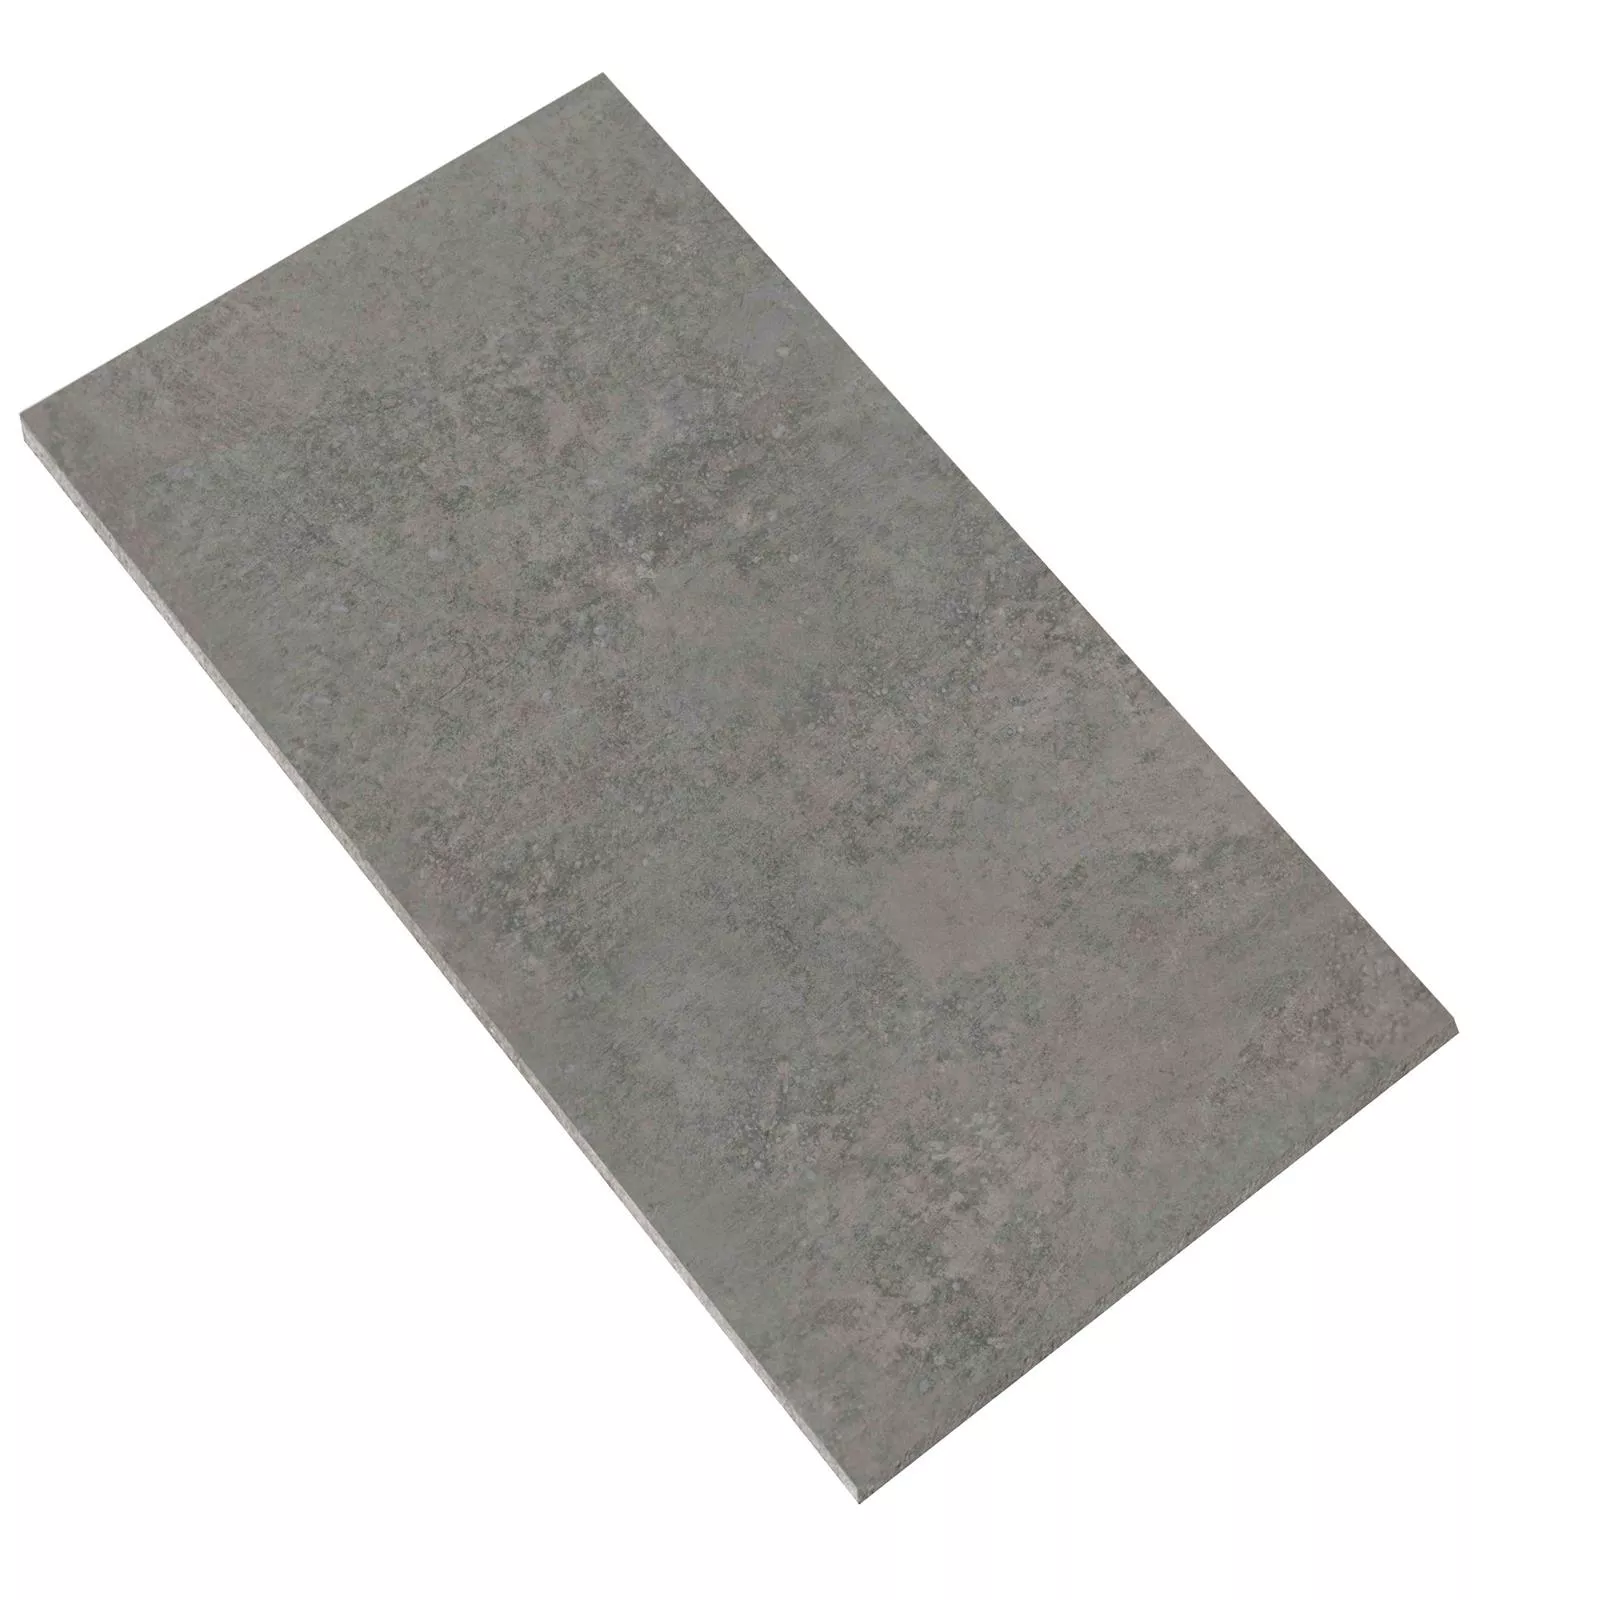 Sample Floor Tiles Peaceway Taupe 30x60cm